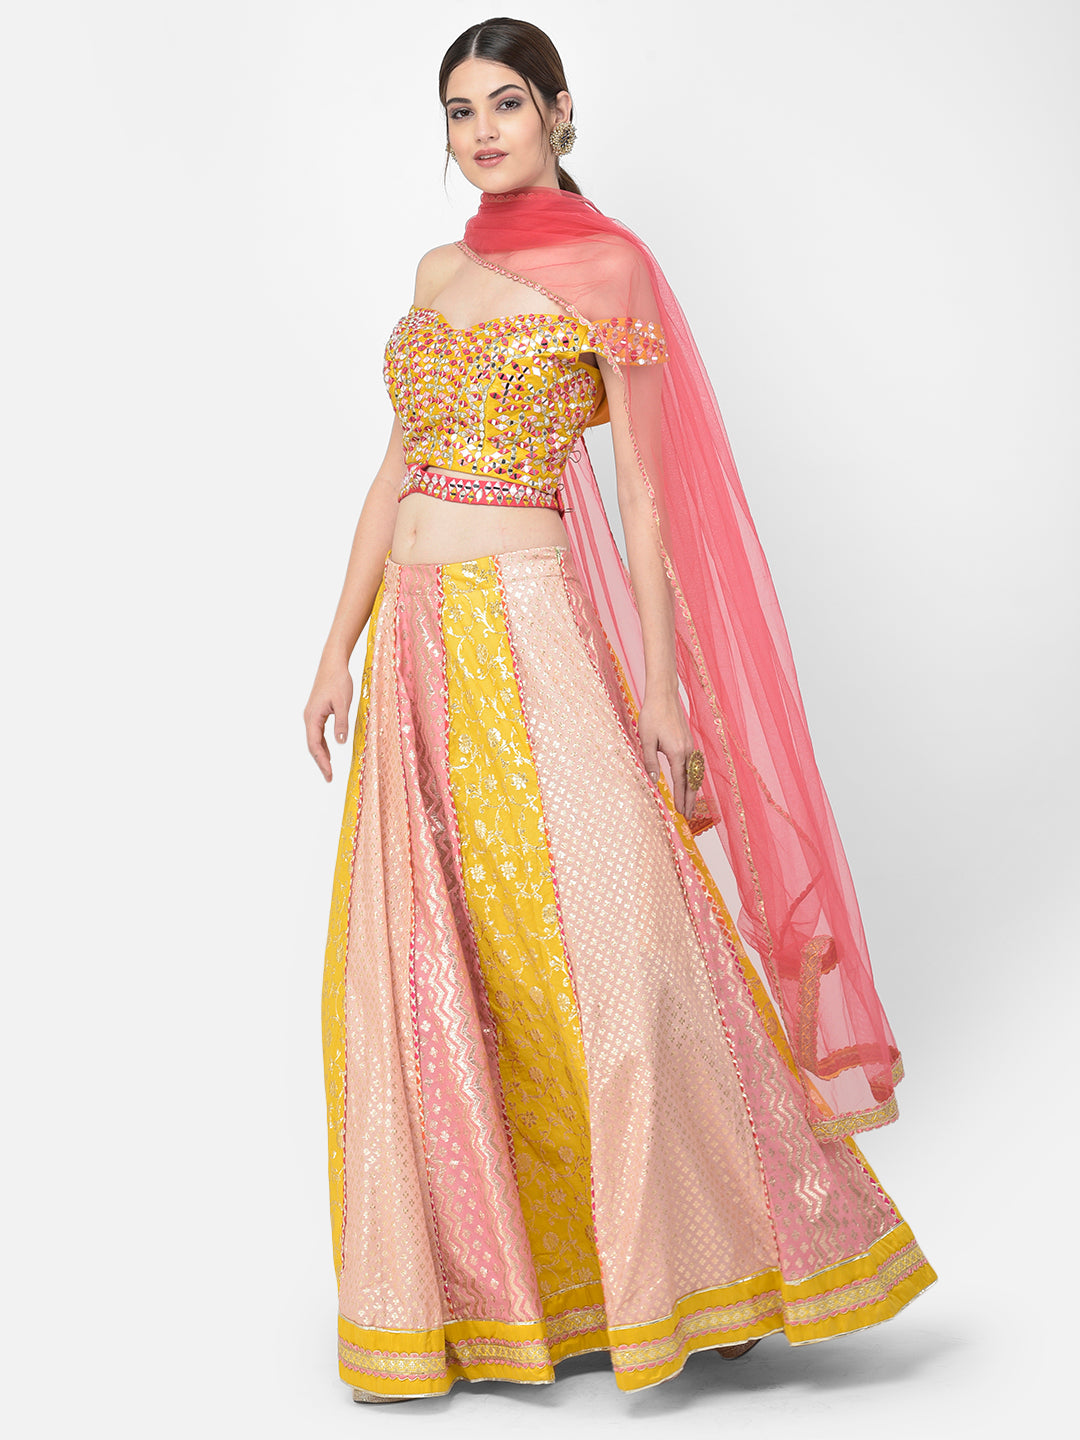 Neeru'S Multicolor Color Banaras Fabric Lehenga Choli